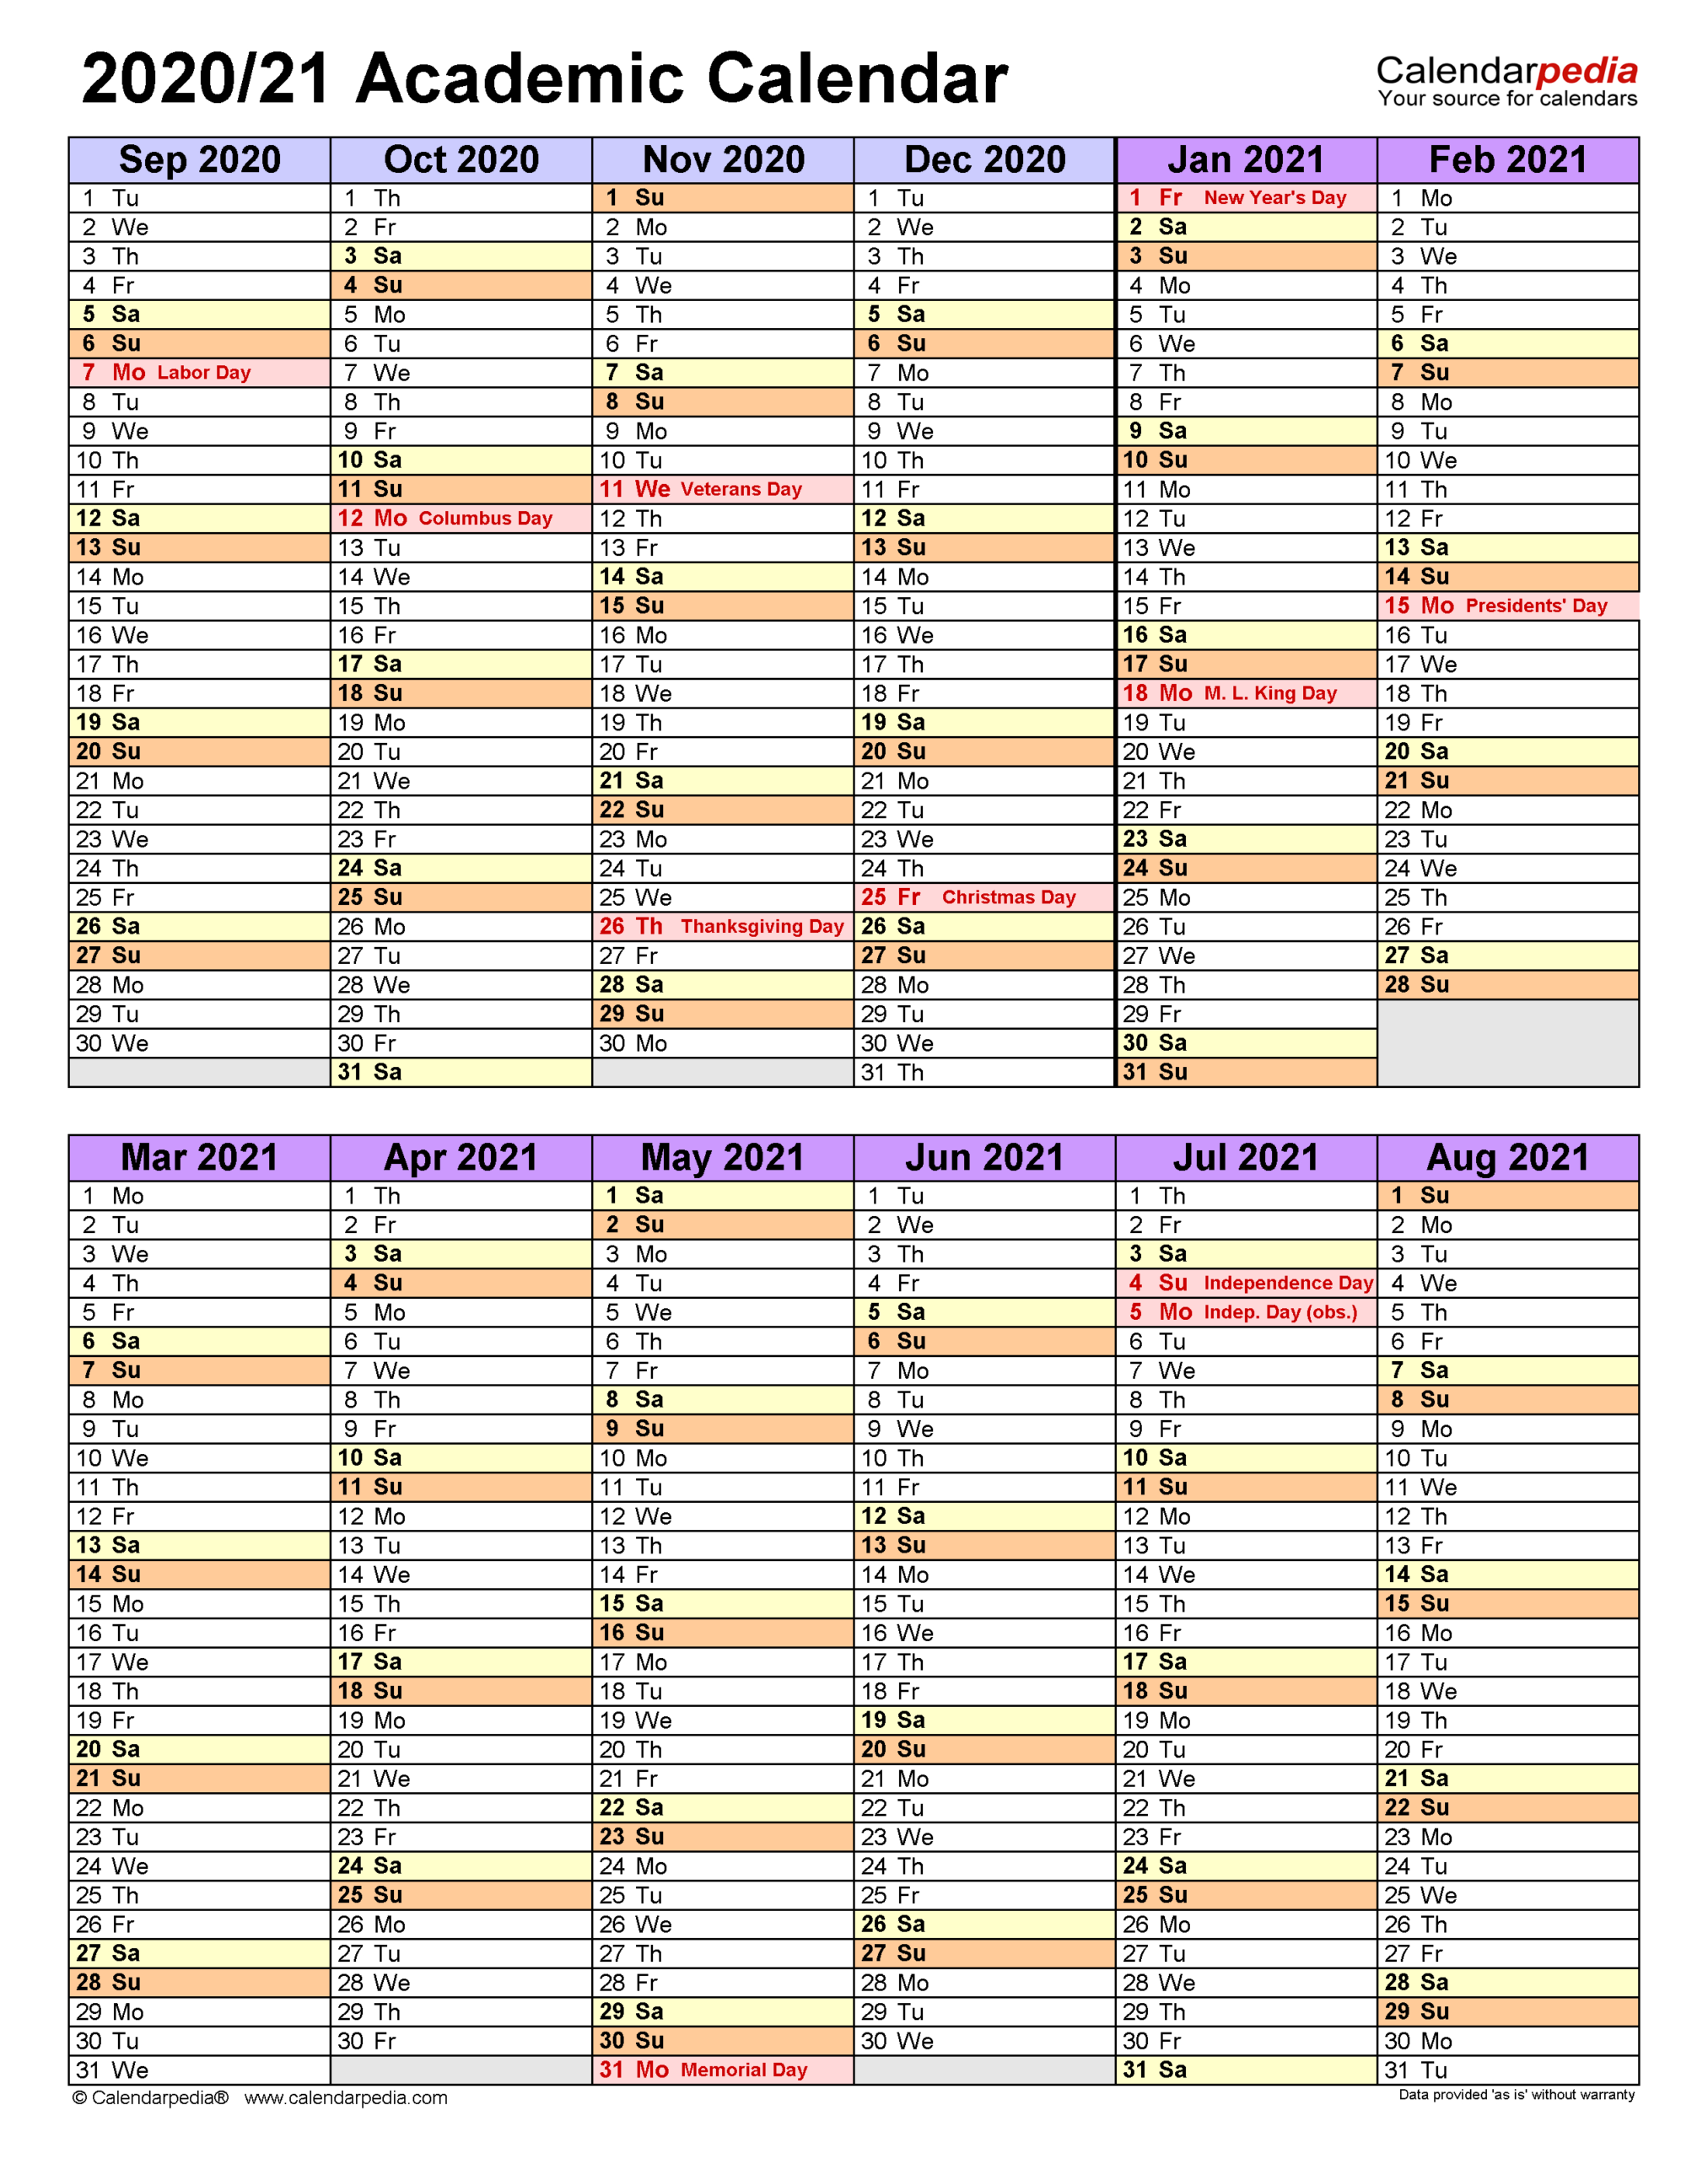 Academic Calendars 2020/2021 - Free Printable Excel Templates